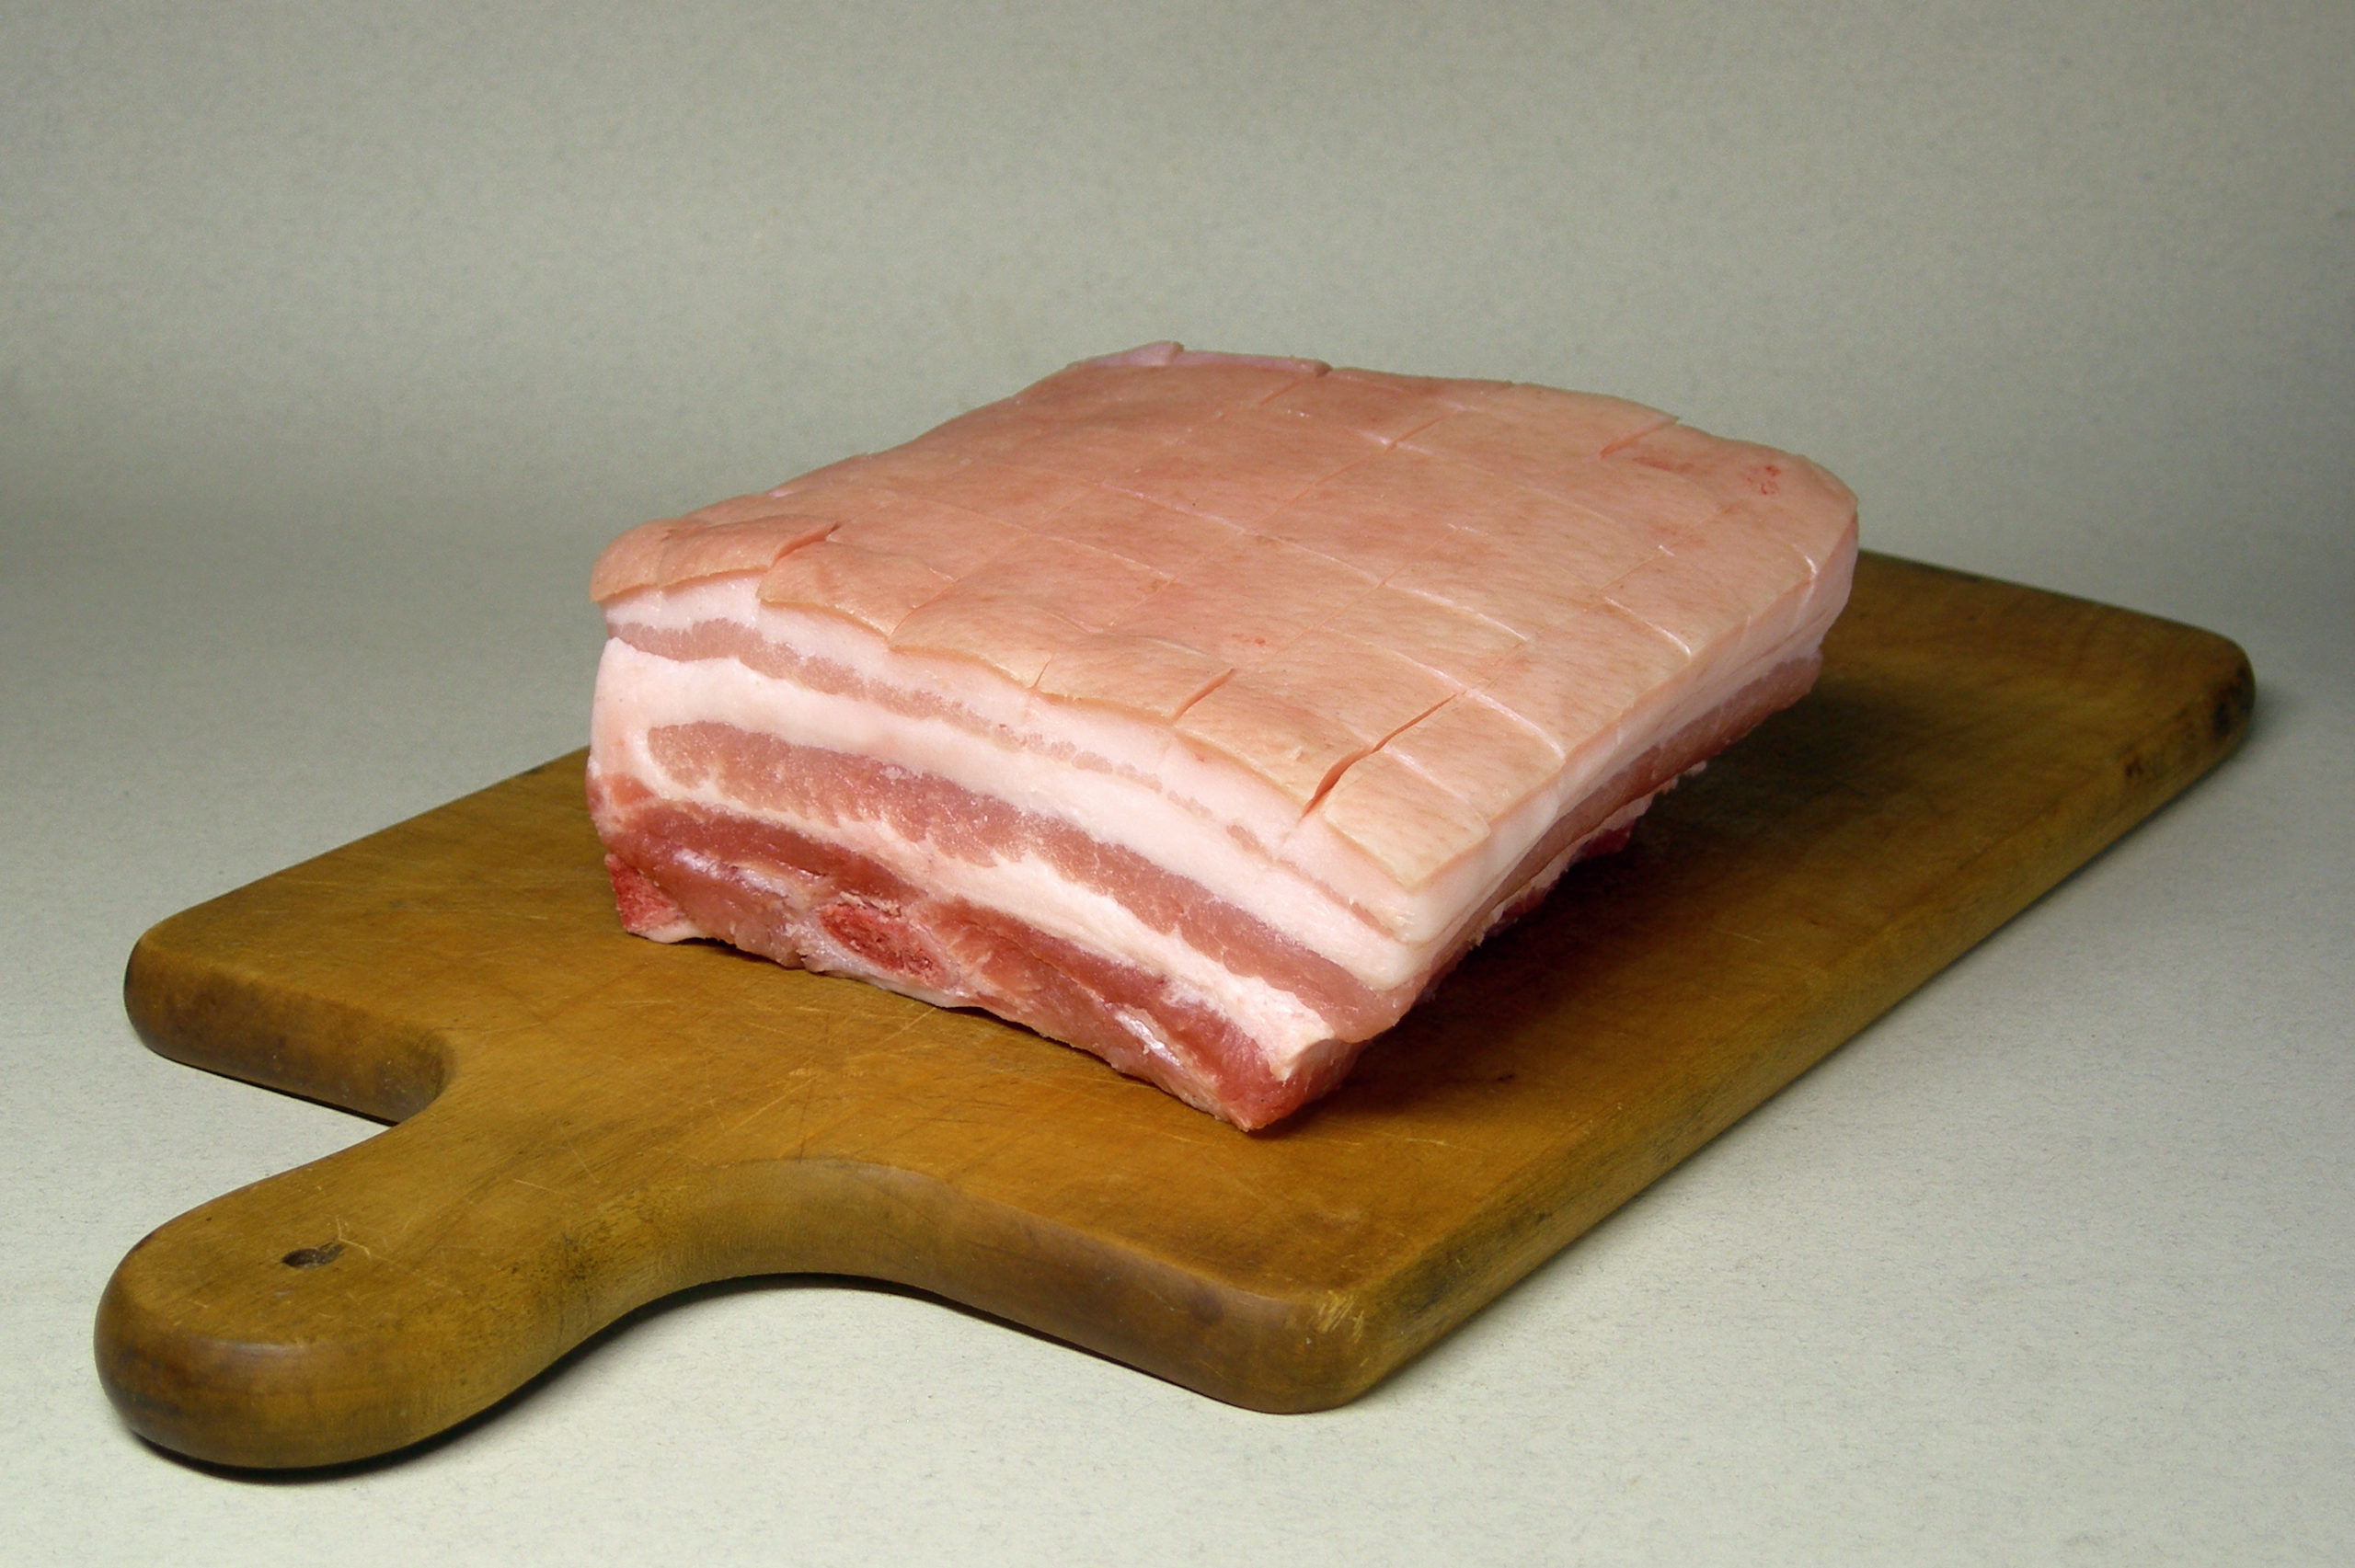 Snacktaku Eats Arby’s Smokehouse Pork Belly Sandwich